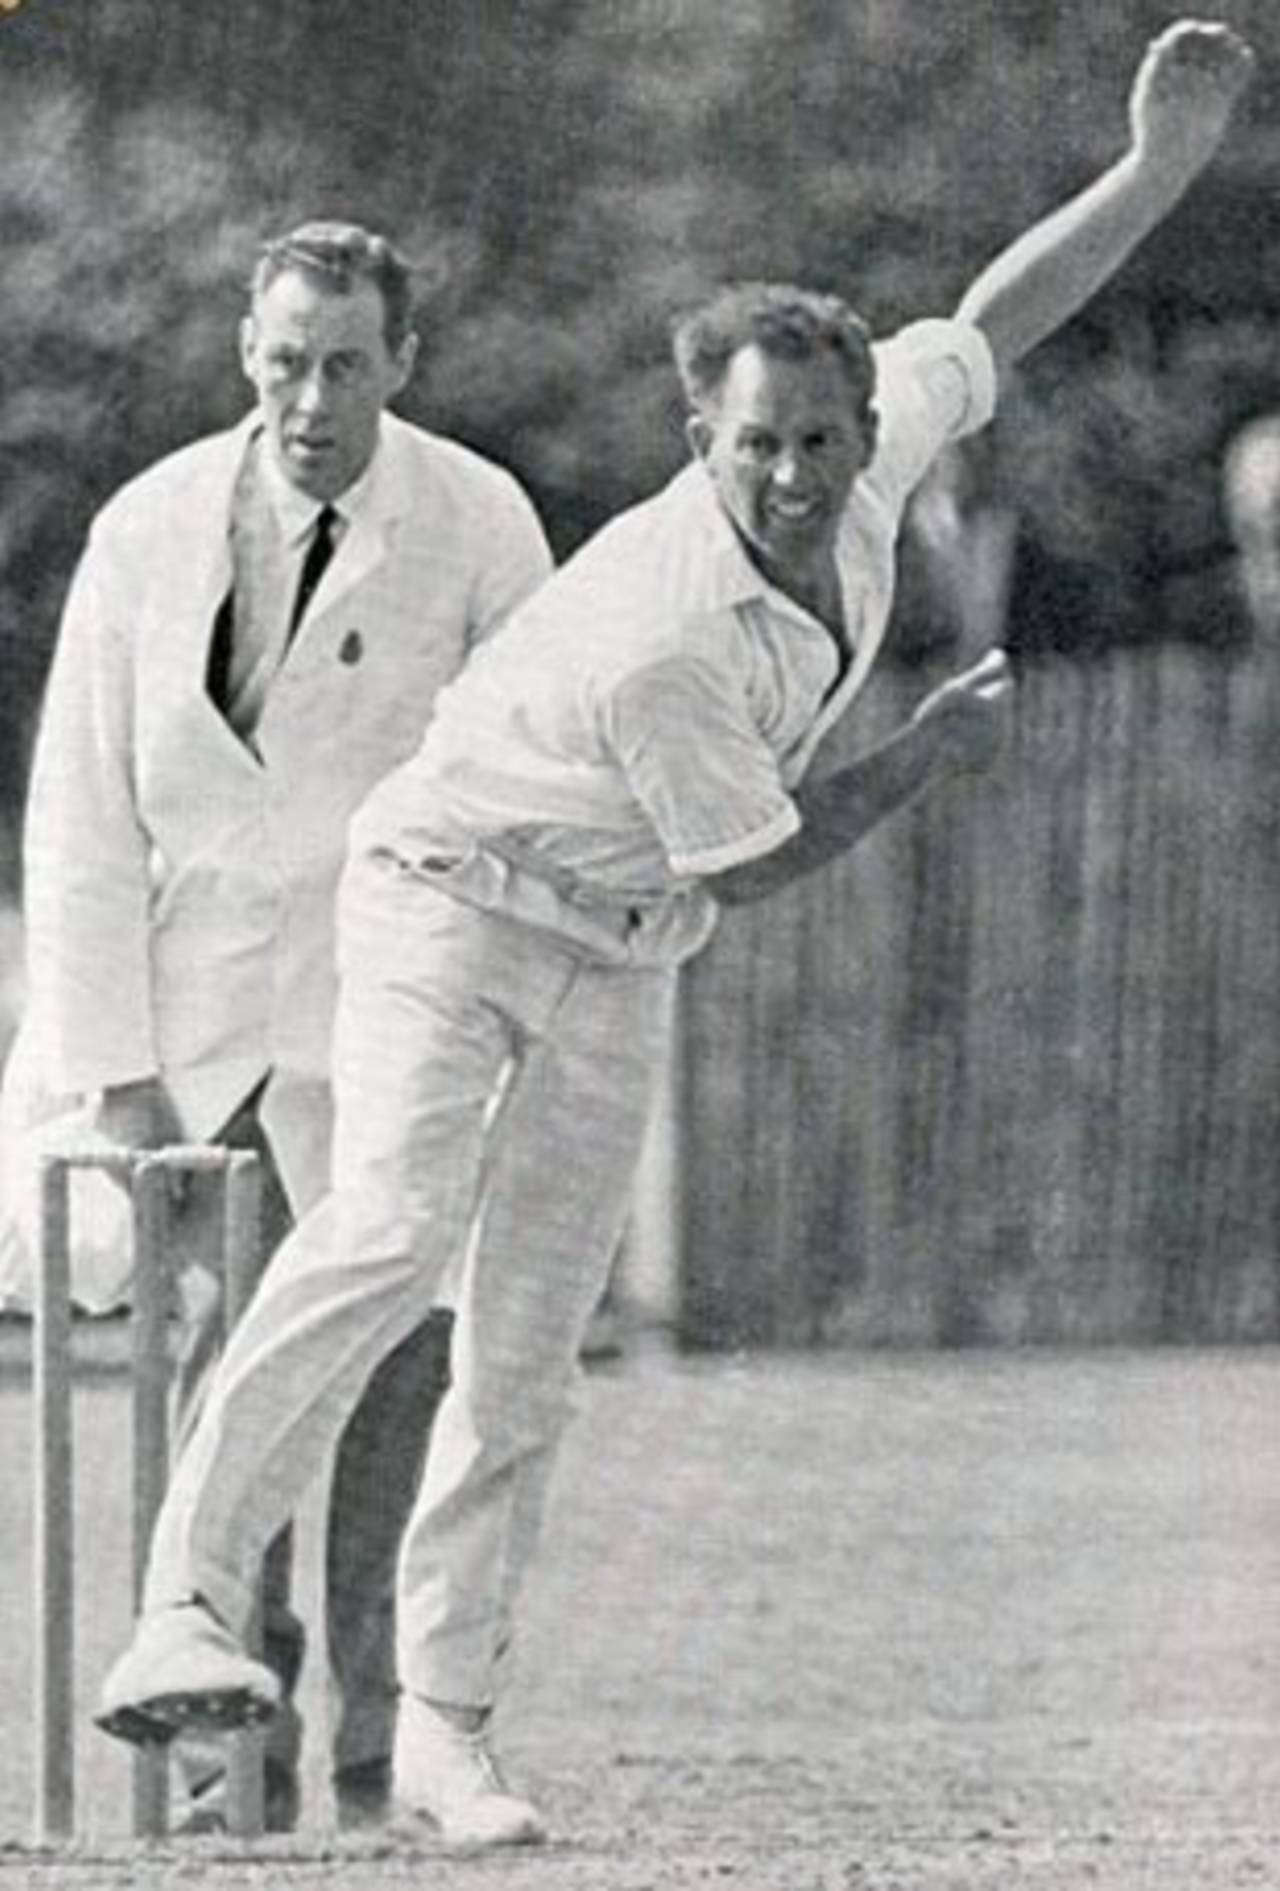 He's a spinner, he's a cutter, he's the most unfortunate bowler in England: Don Shepherd took 2218 first-class wickets, yet never represented England&nbsp;&nbsp;&bull;&nbsp;&nbsp;Playfair Cricket Monthly